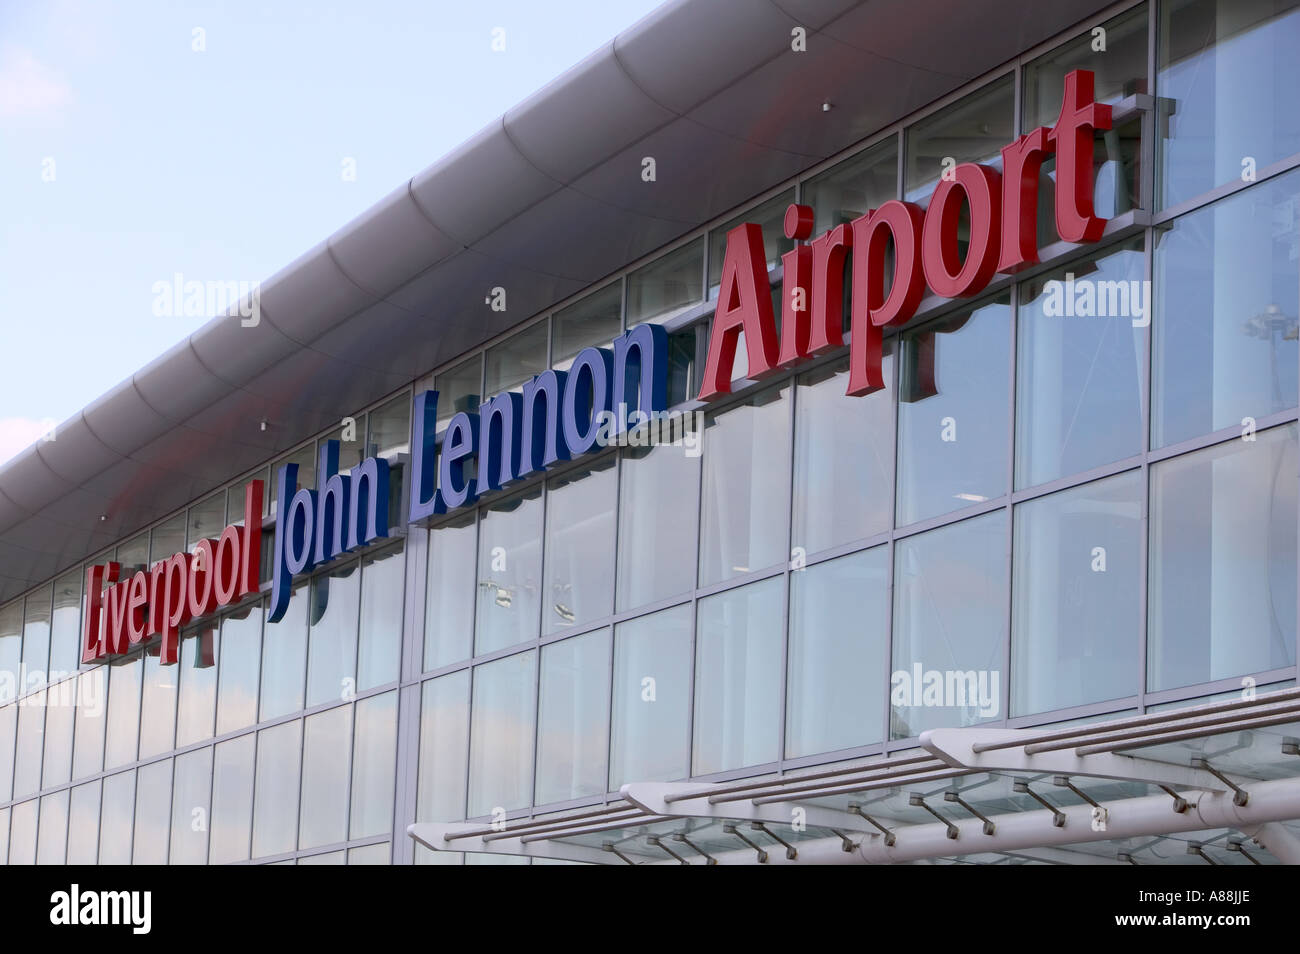 John Lennon airport, Liverpool, England Stock Photo